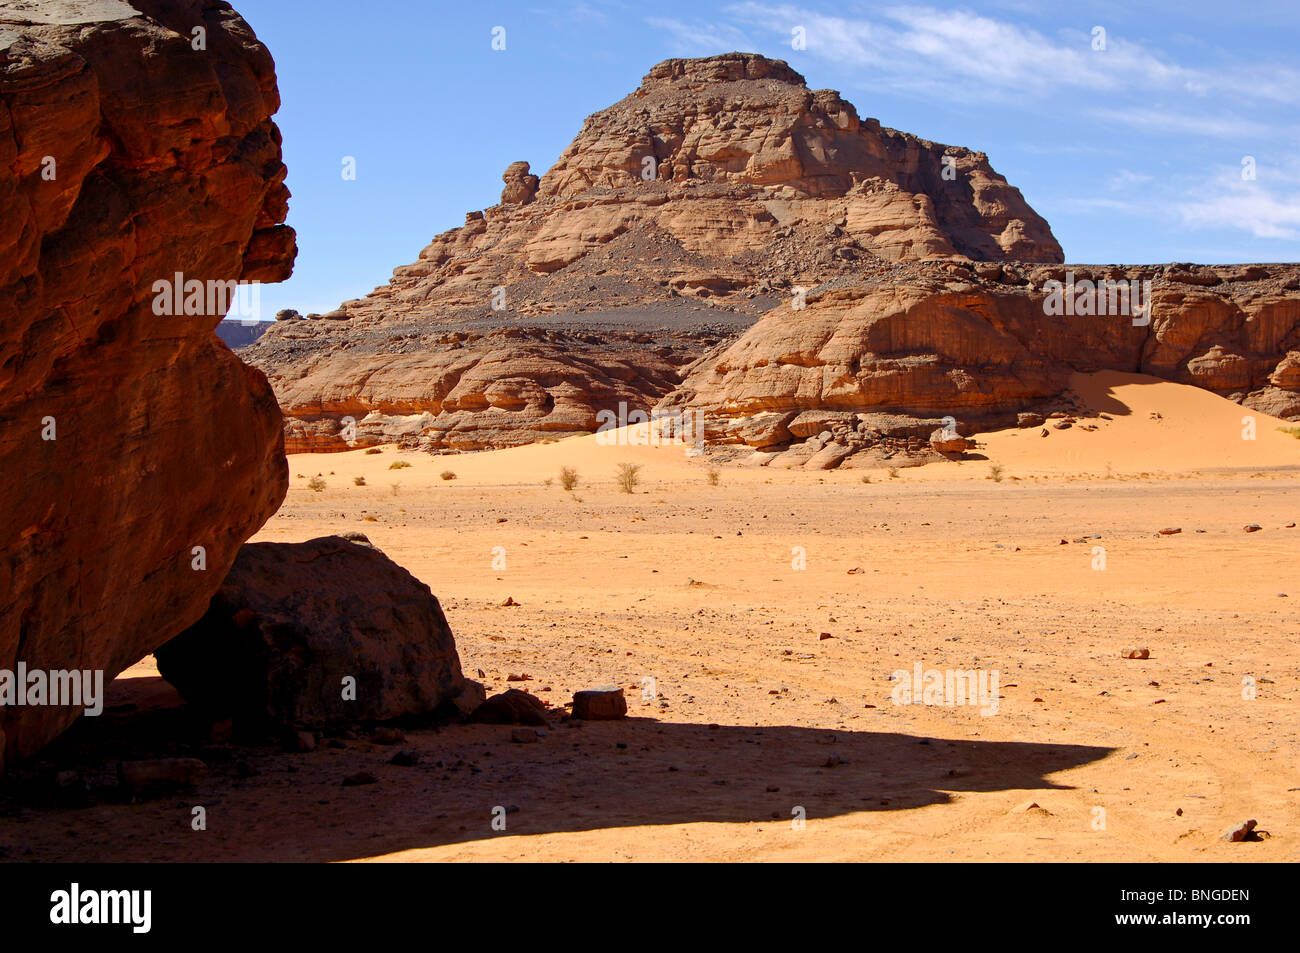 Rock formation in the Acacus Mountains, Sahara desert, Libya Stock Photo